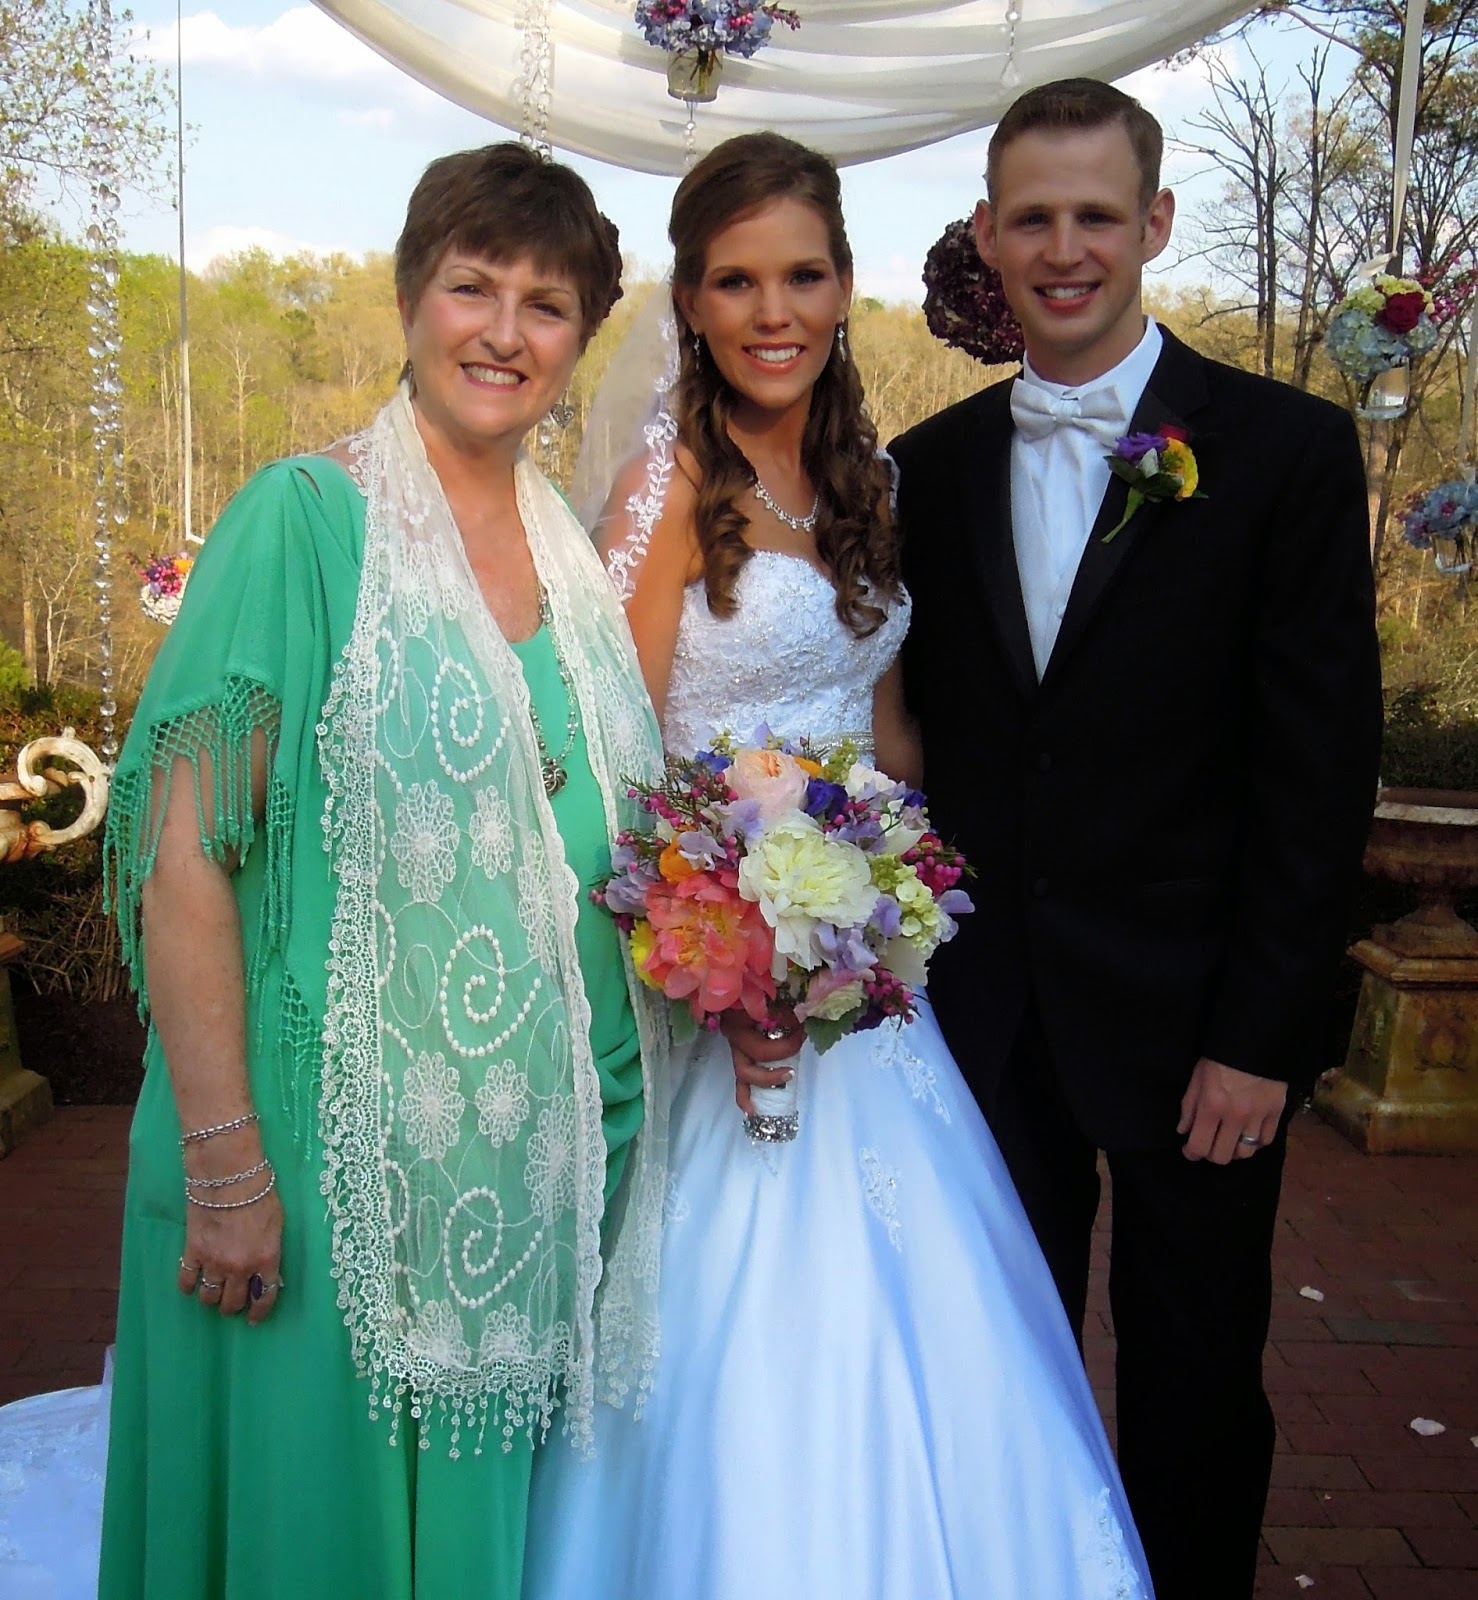 Raleigh Wedding Blog: Ashlee and Jay's Beautiful Wedding at Highgrove!